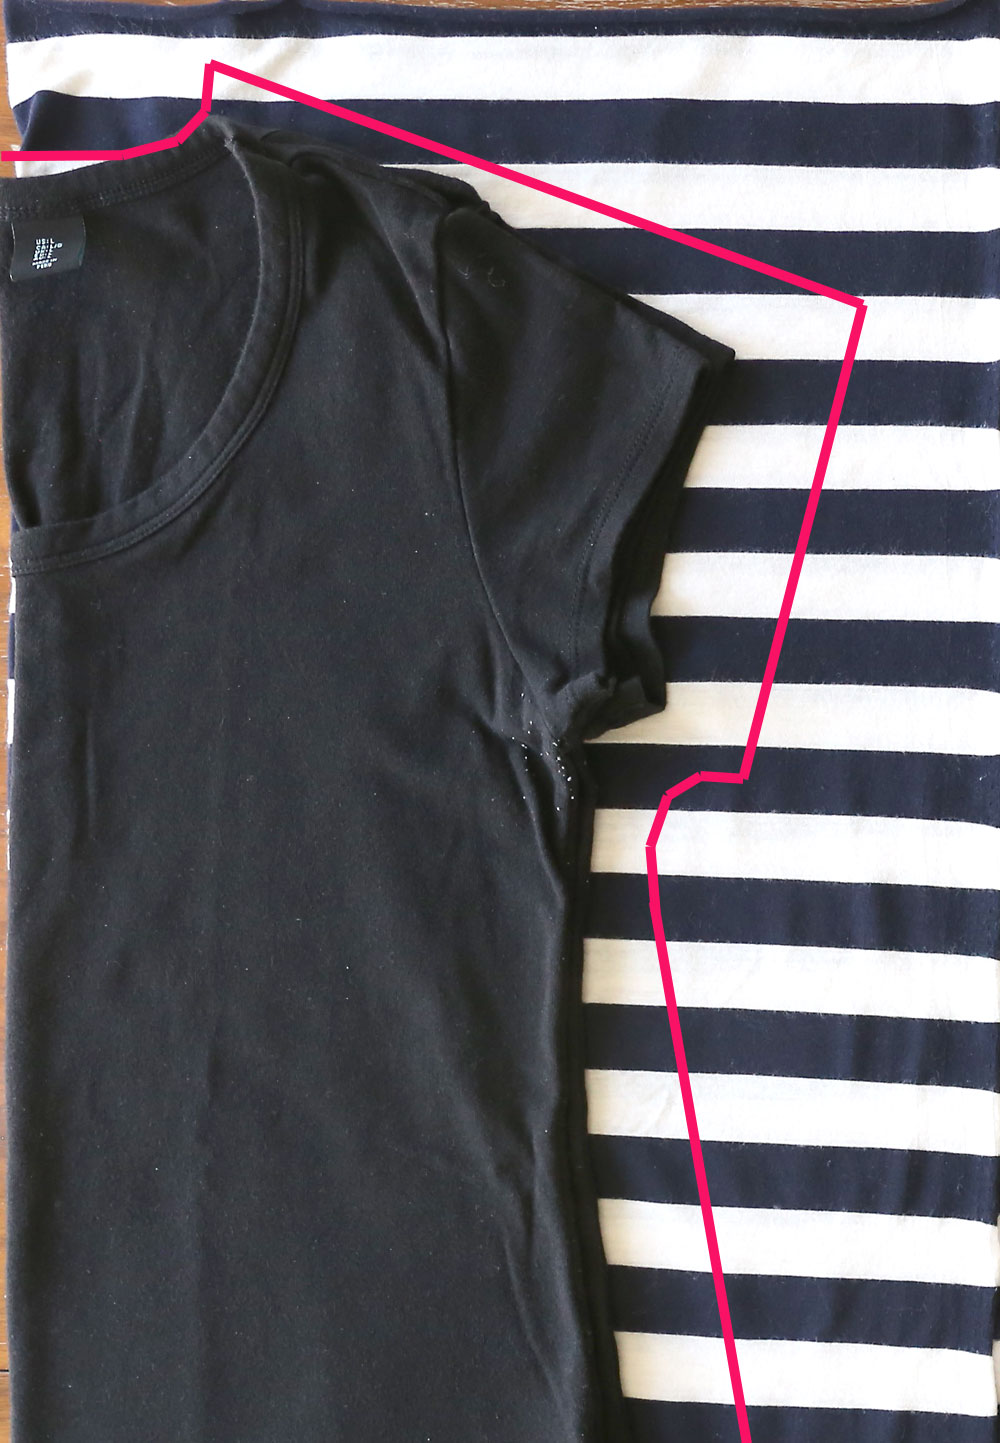 Tracing around a t-shirt onto fabric